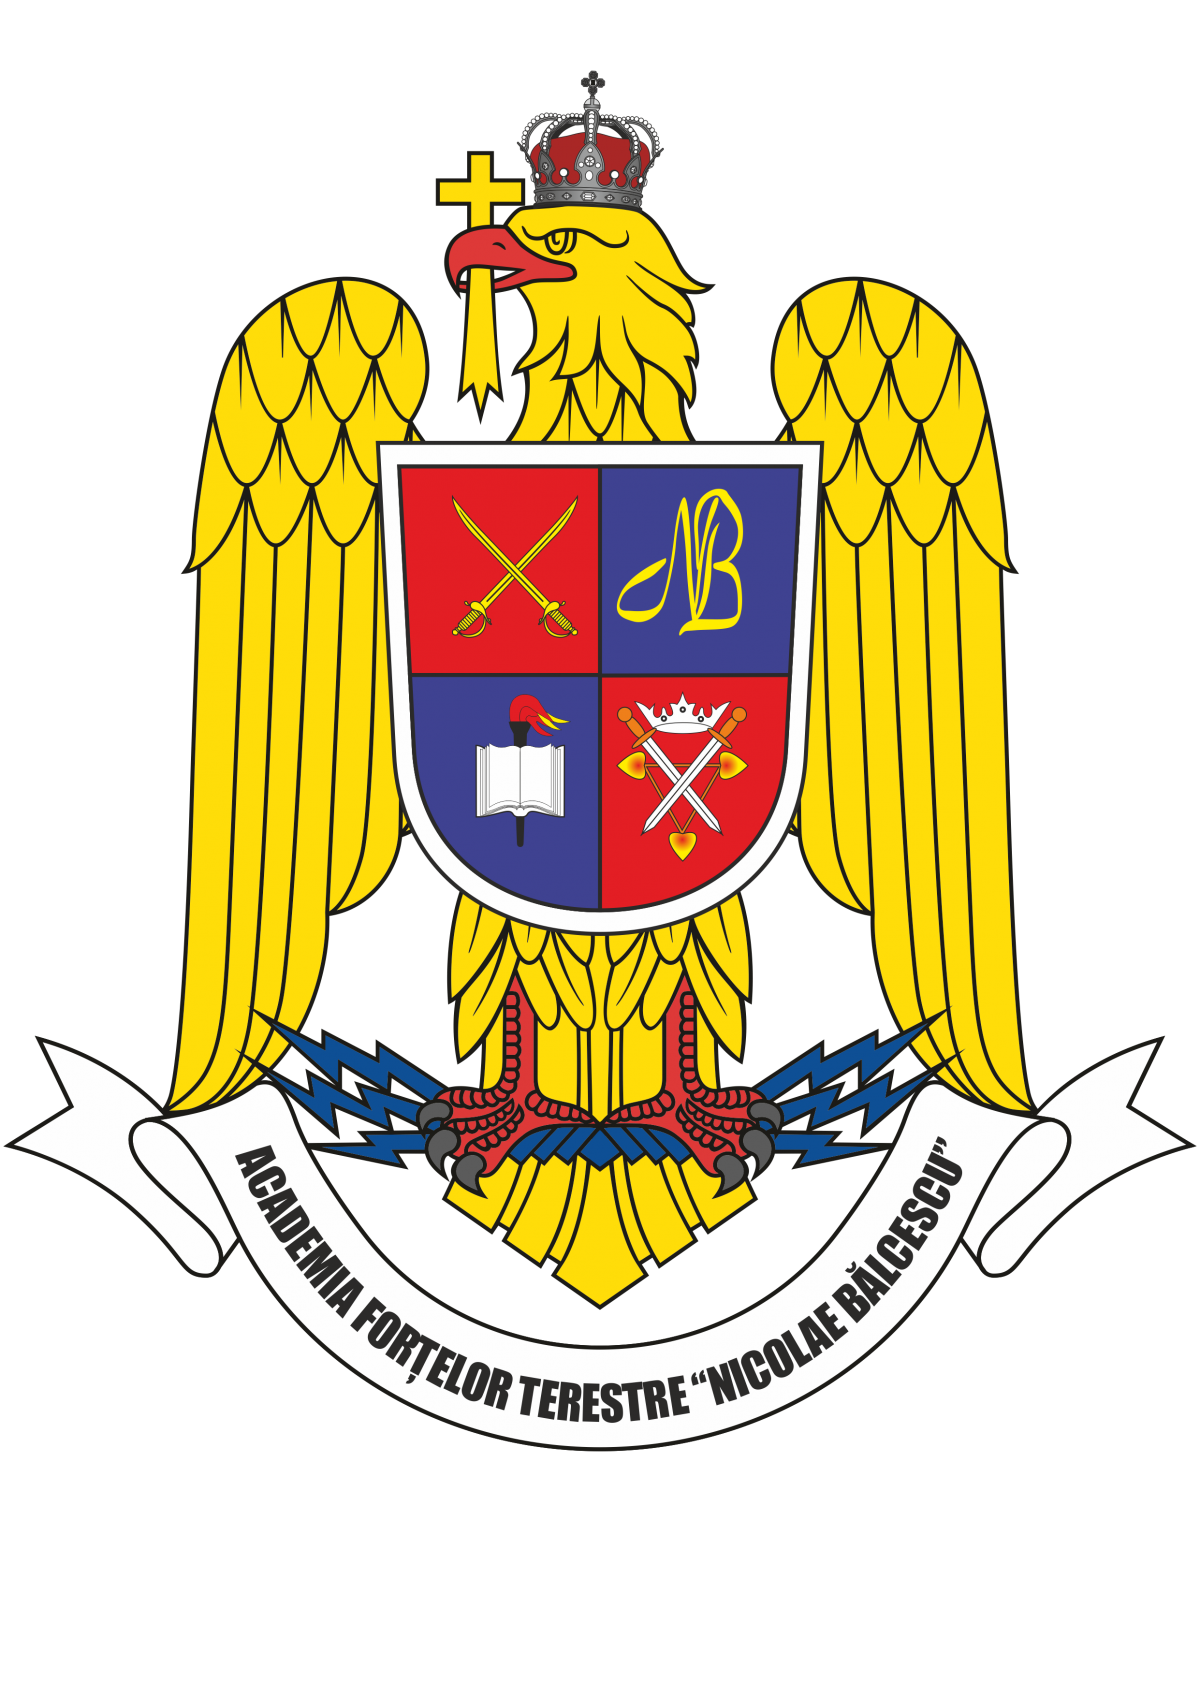 Nicolae Bălcescu Land Forces Academy logo